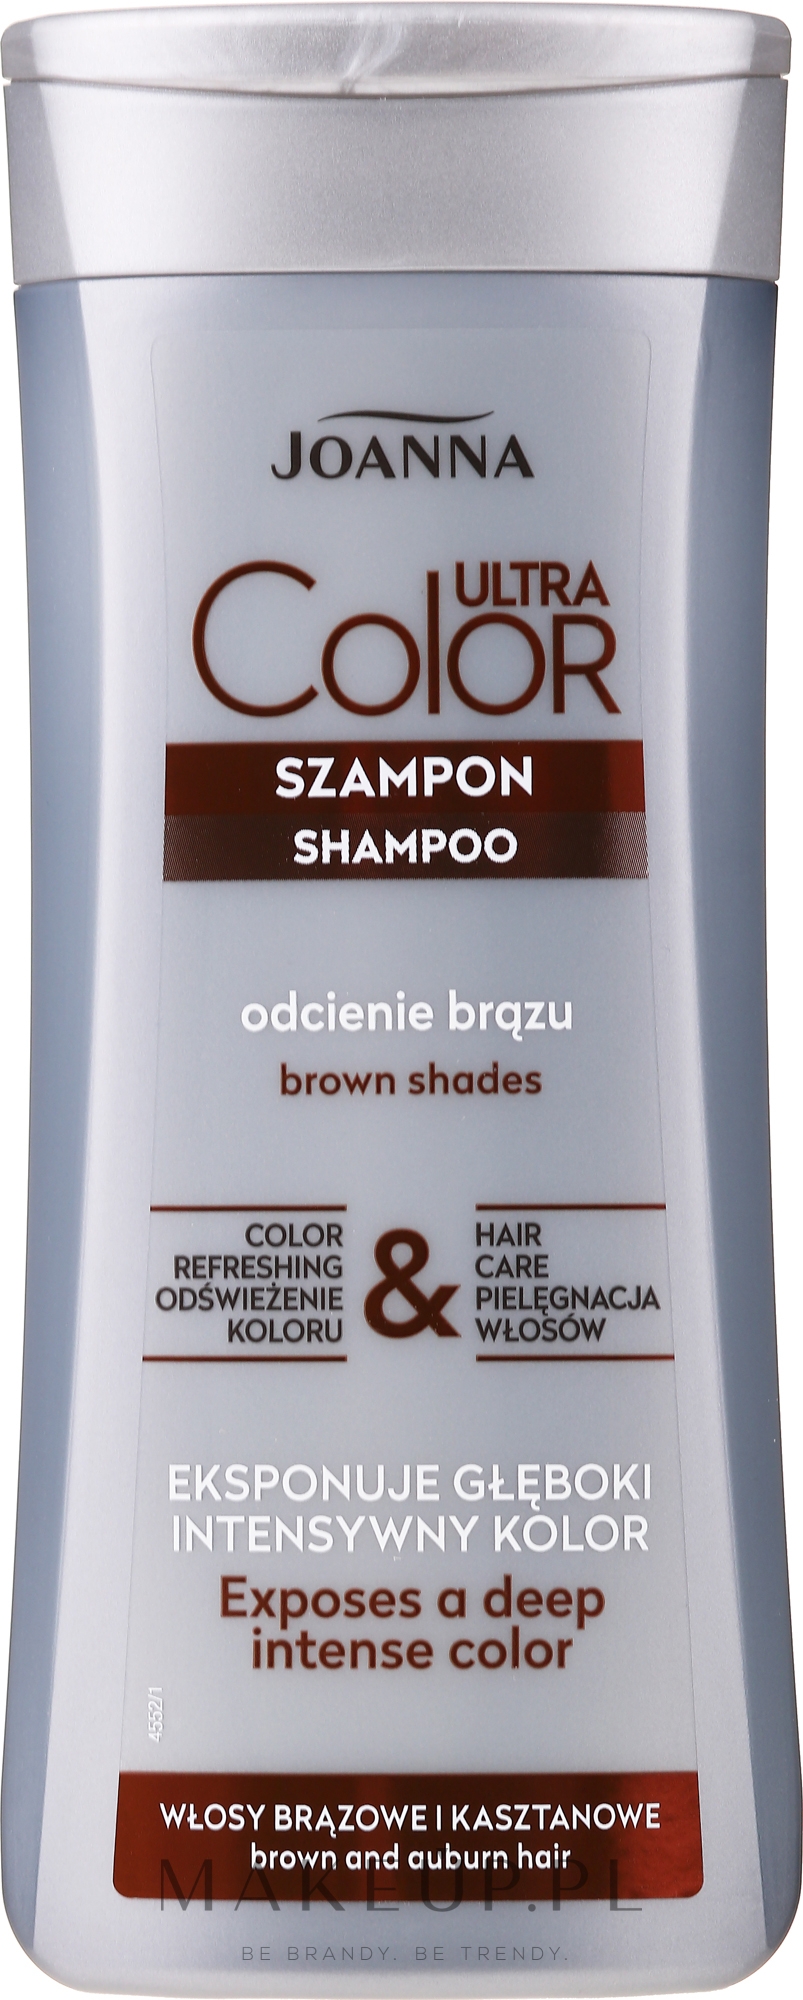 szampon nadający kolor